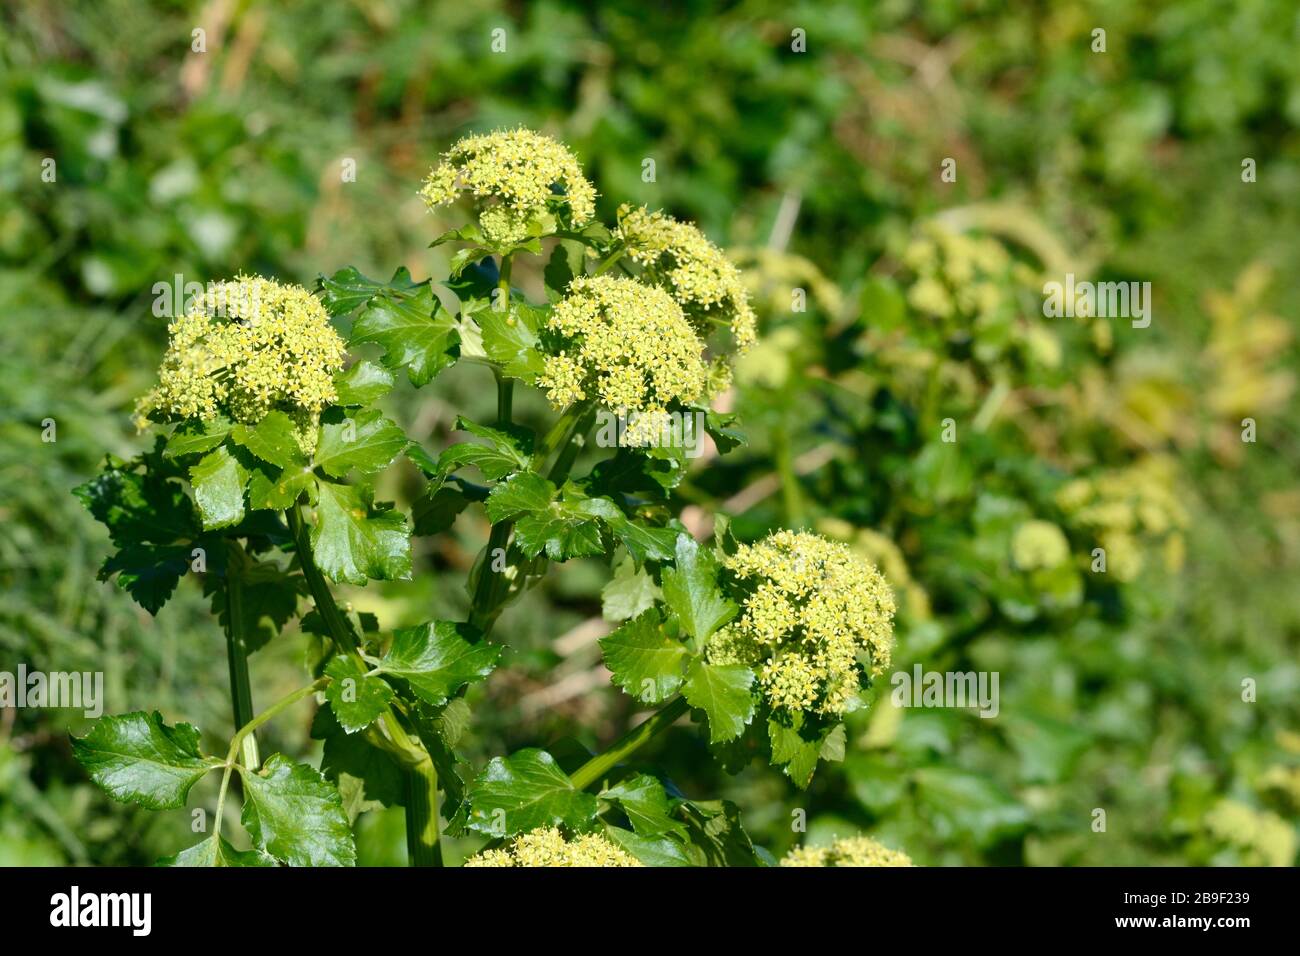 Alexanders flowers Smyrnium oluastrum growing in a hedge edible flowering plant Stock Photo